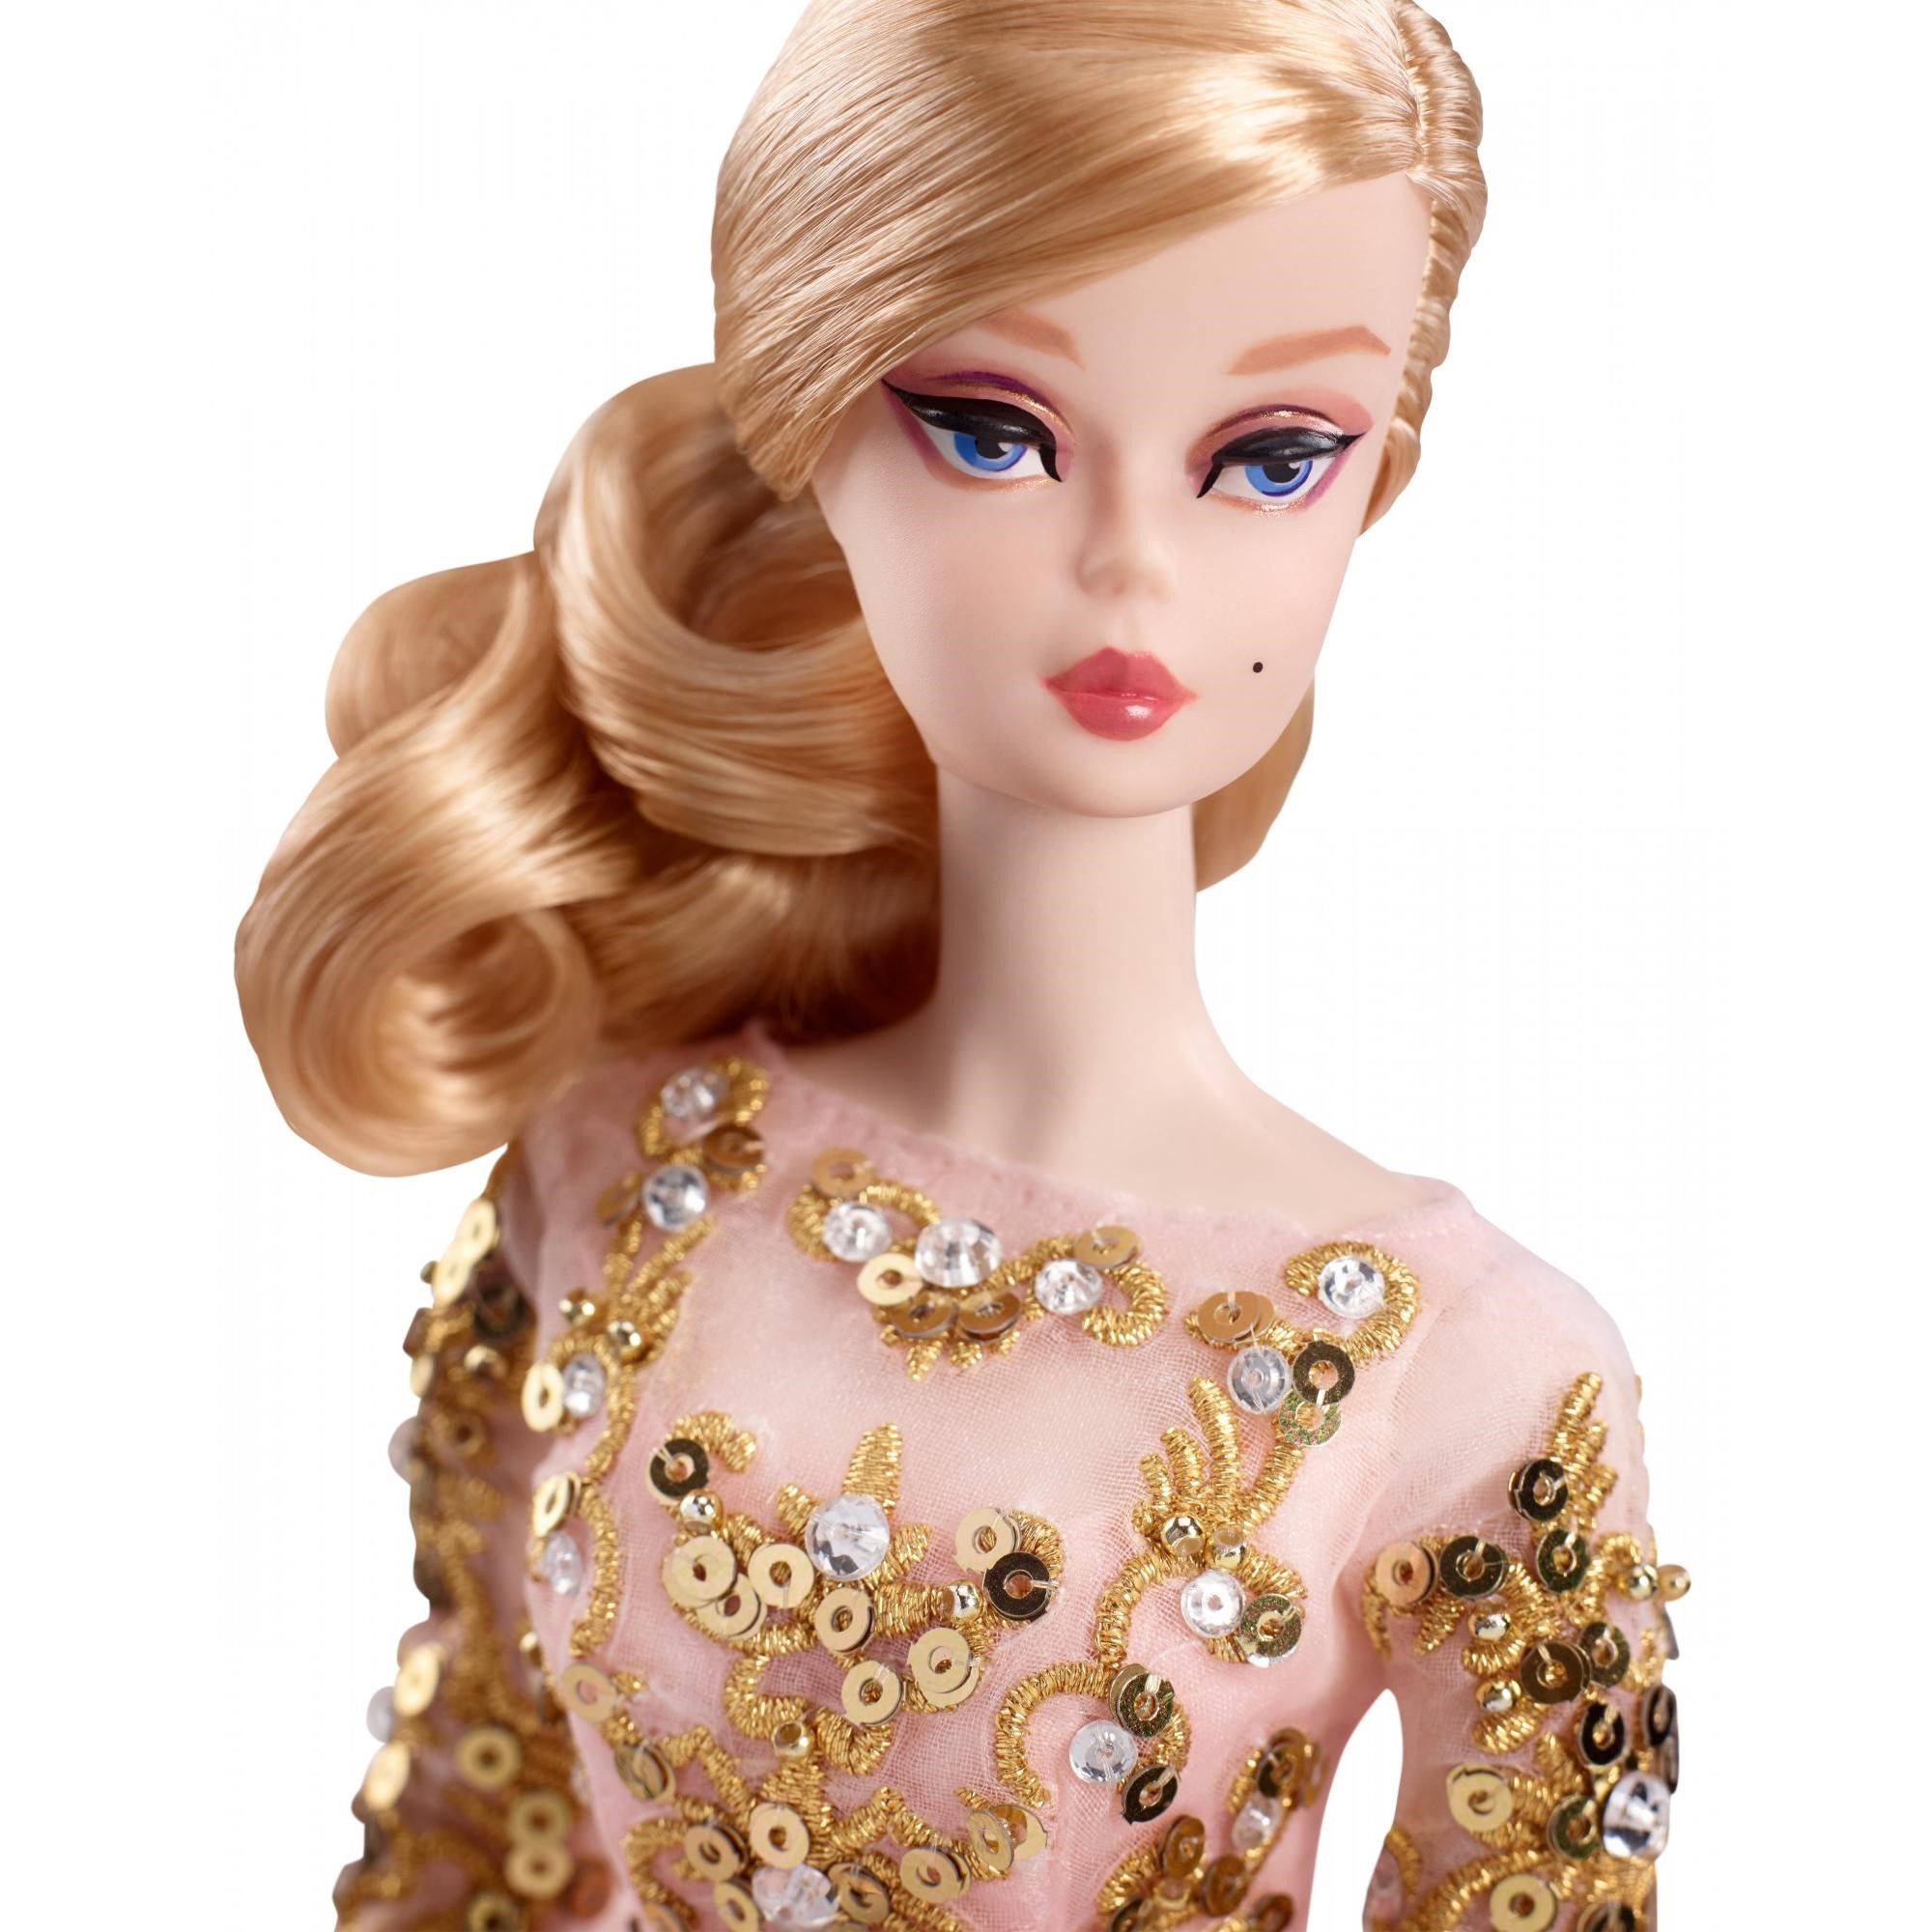 Barbie BFMC Nurse Silkstone Doll Europe Exclusive